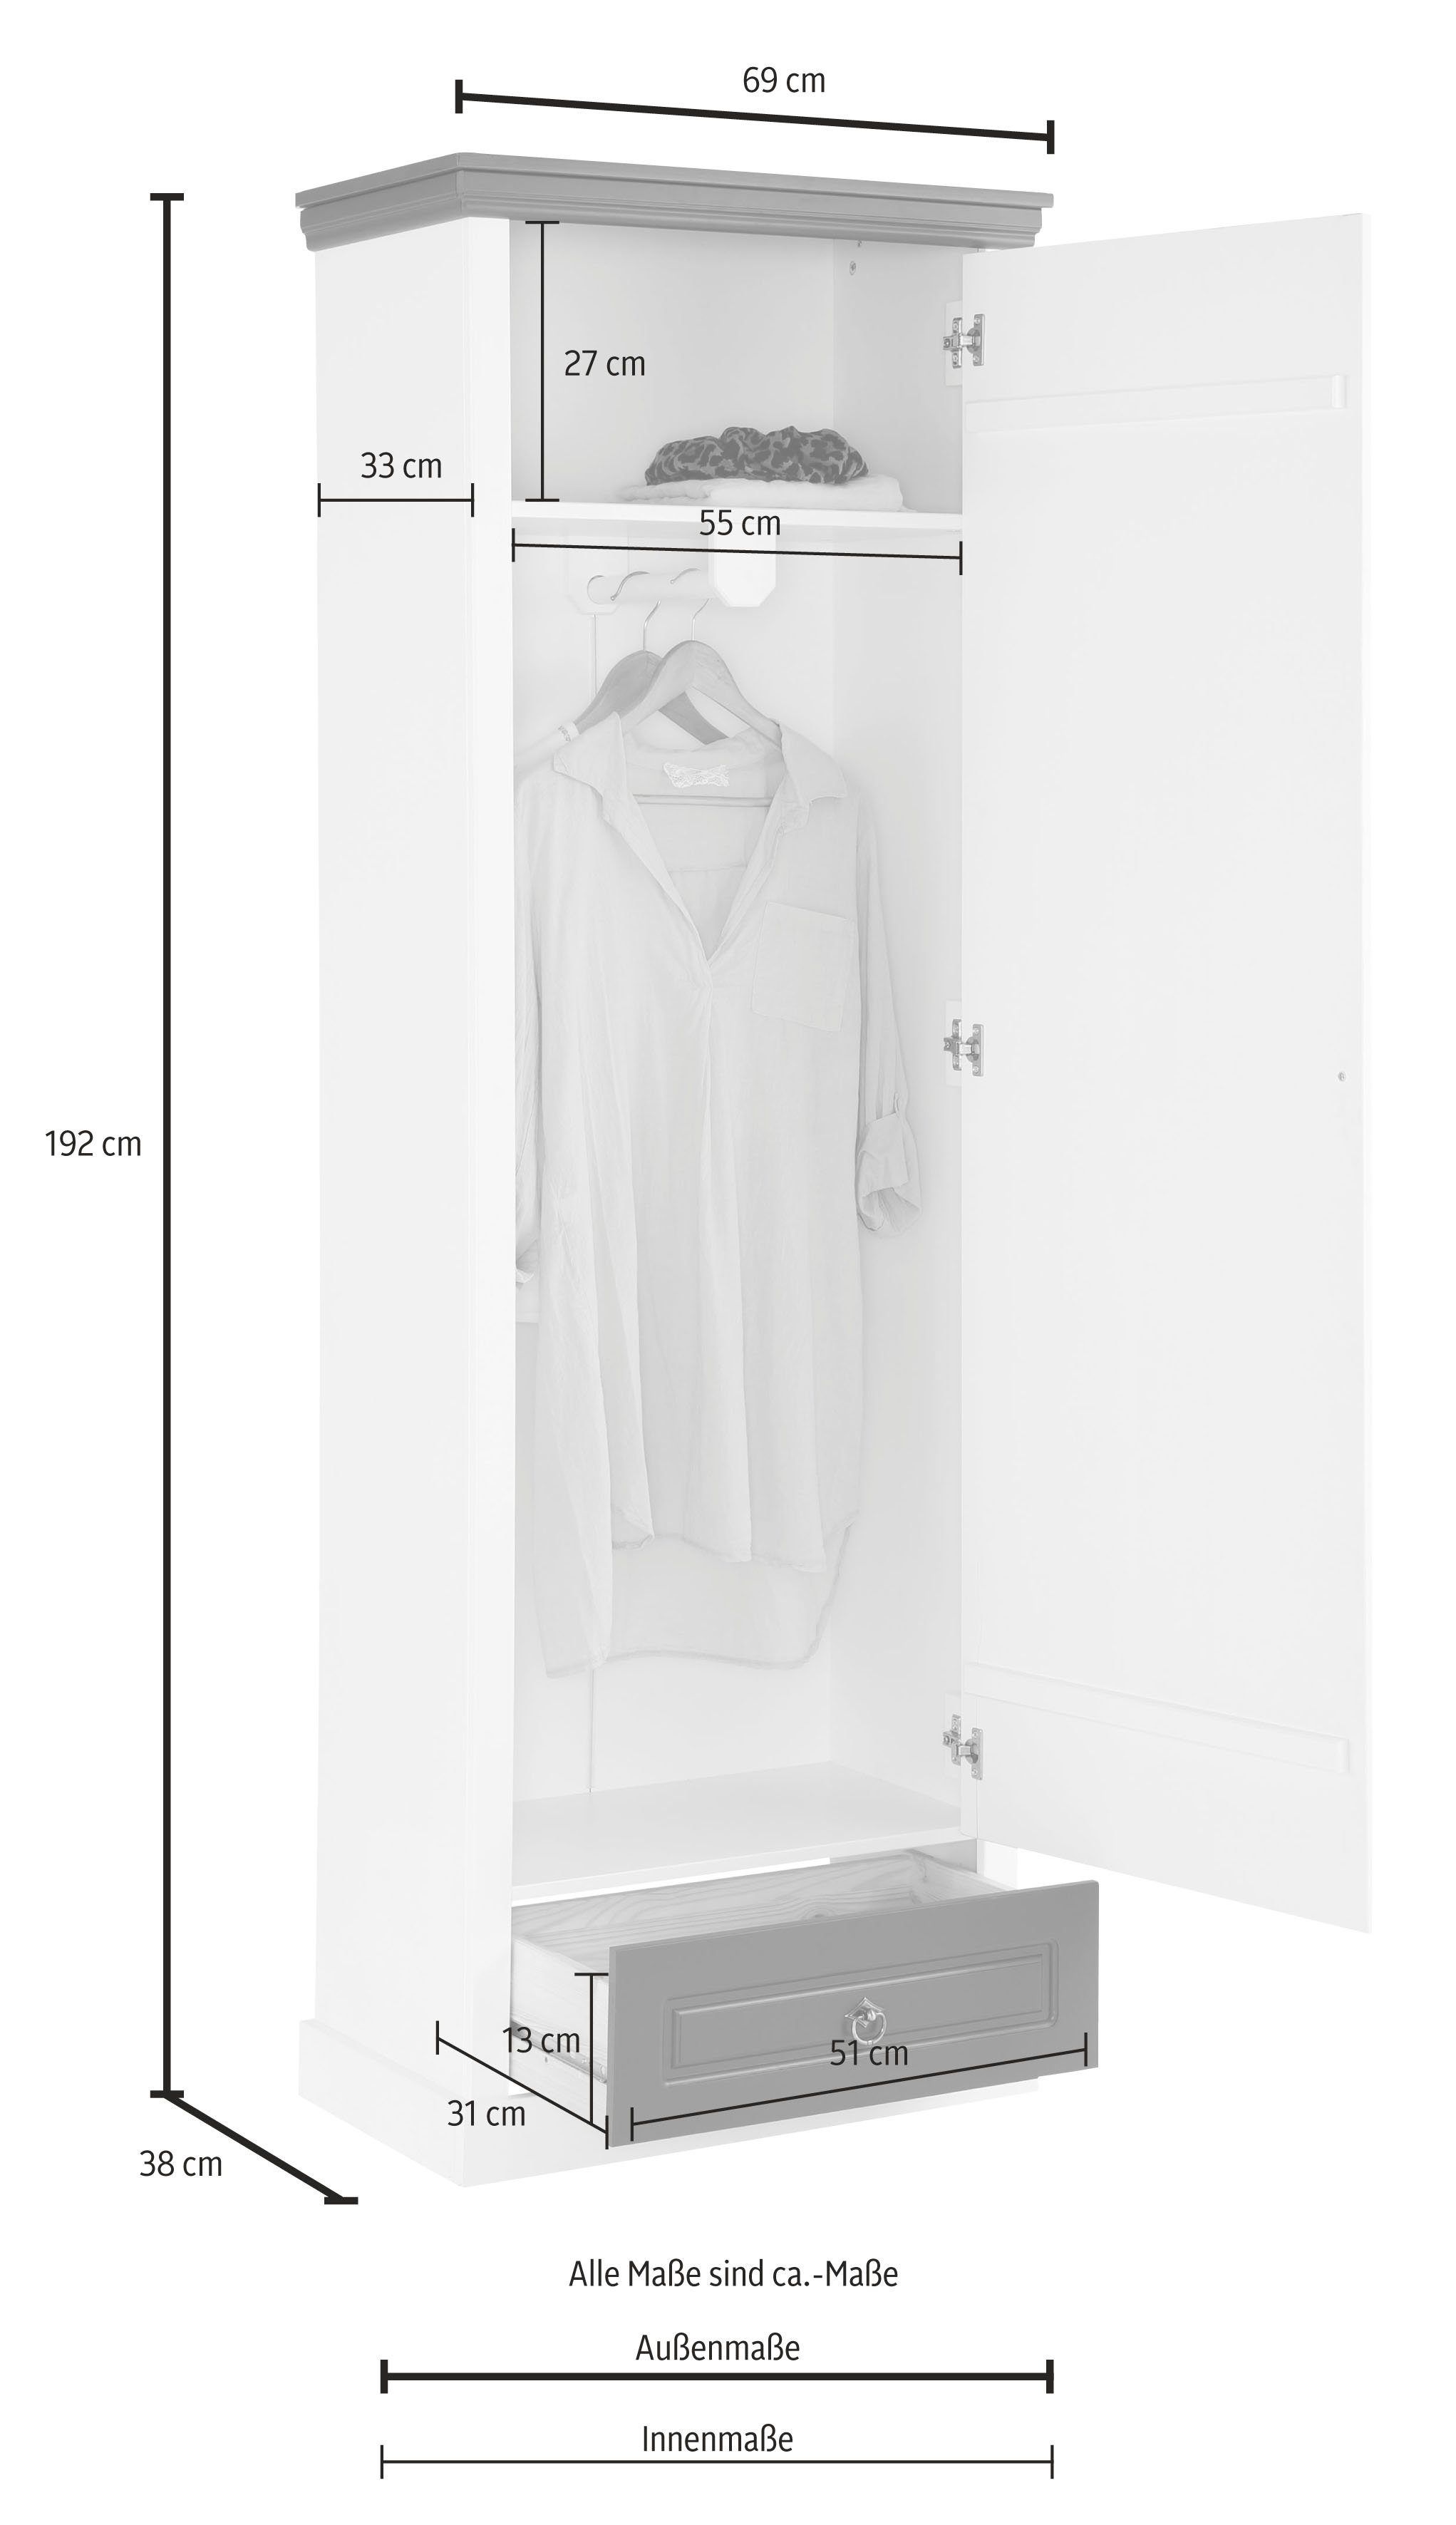 Home affaire Basilico massiver | Garderobenschrank Aus weiß/grau weiß/grau Kiefer